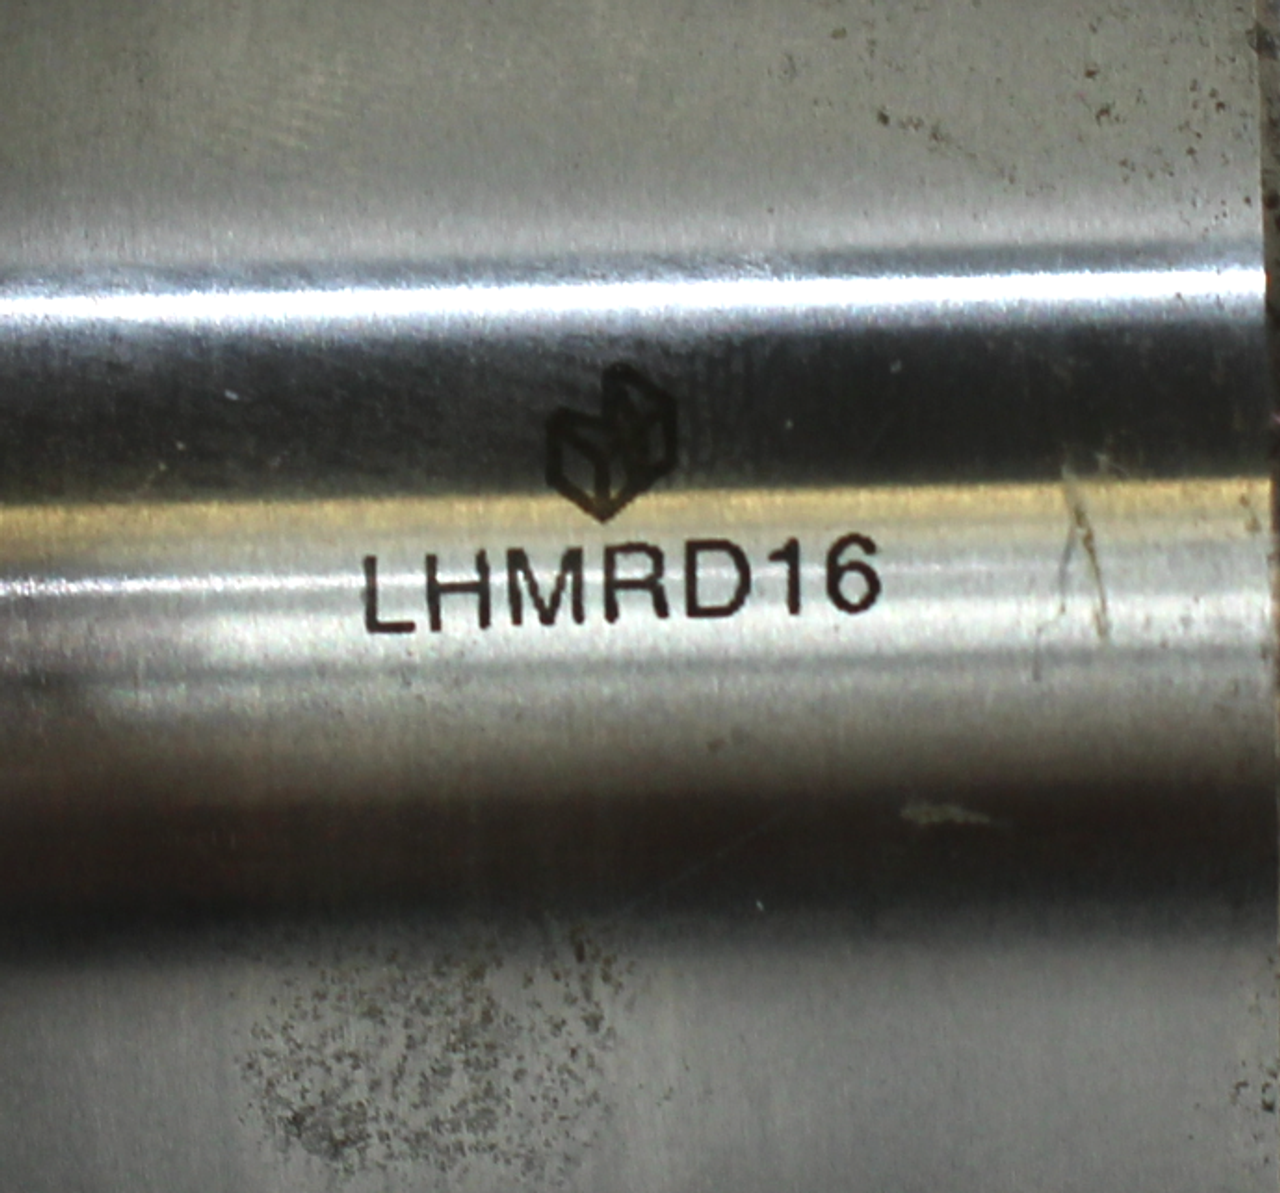 Misumi LHMRD16 Center Flanged Linear Ball Bearing